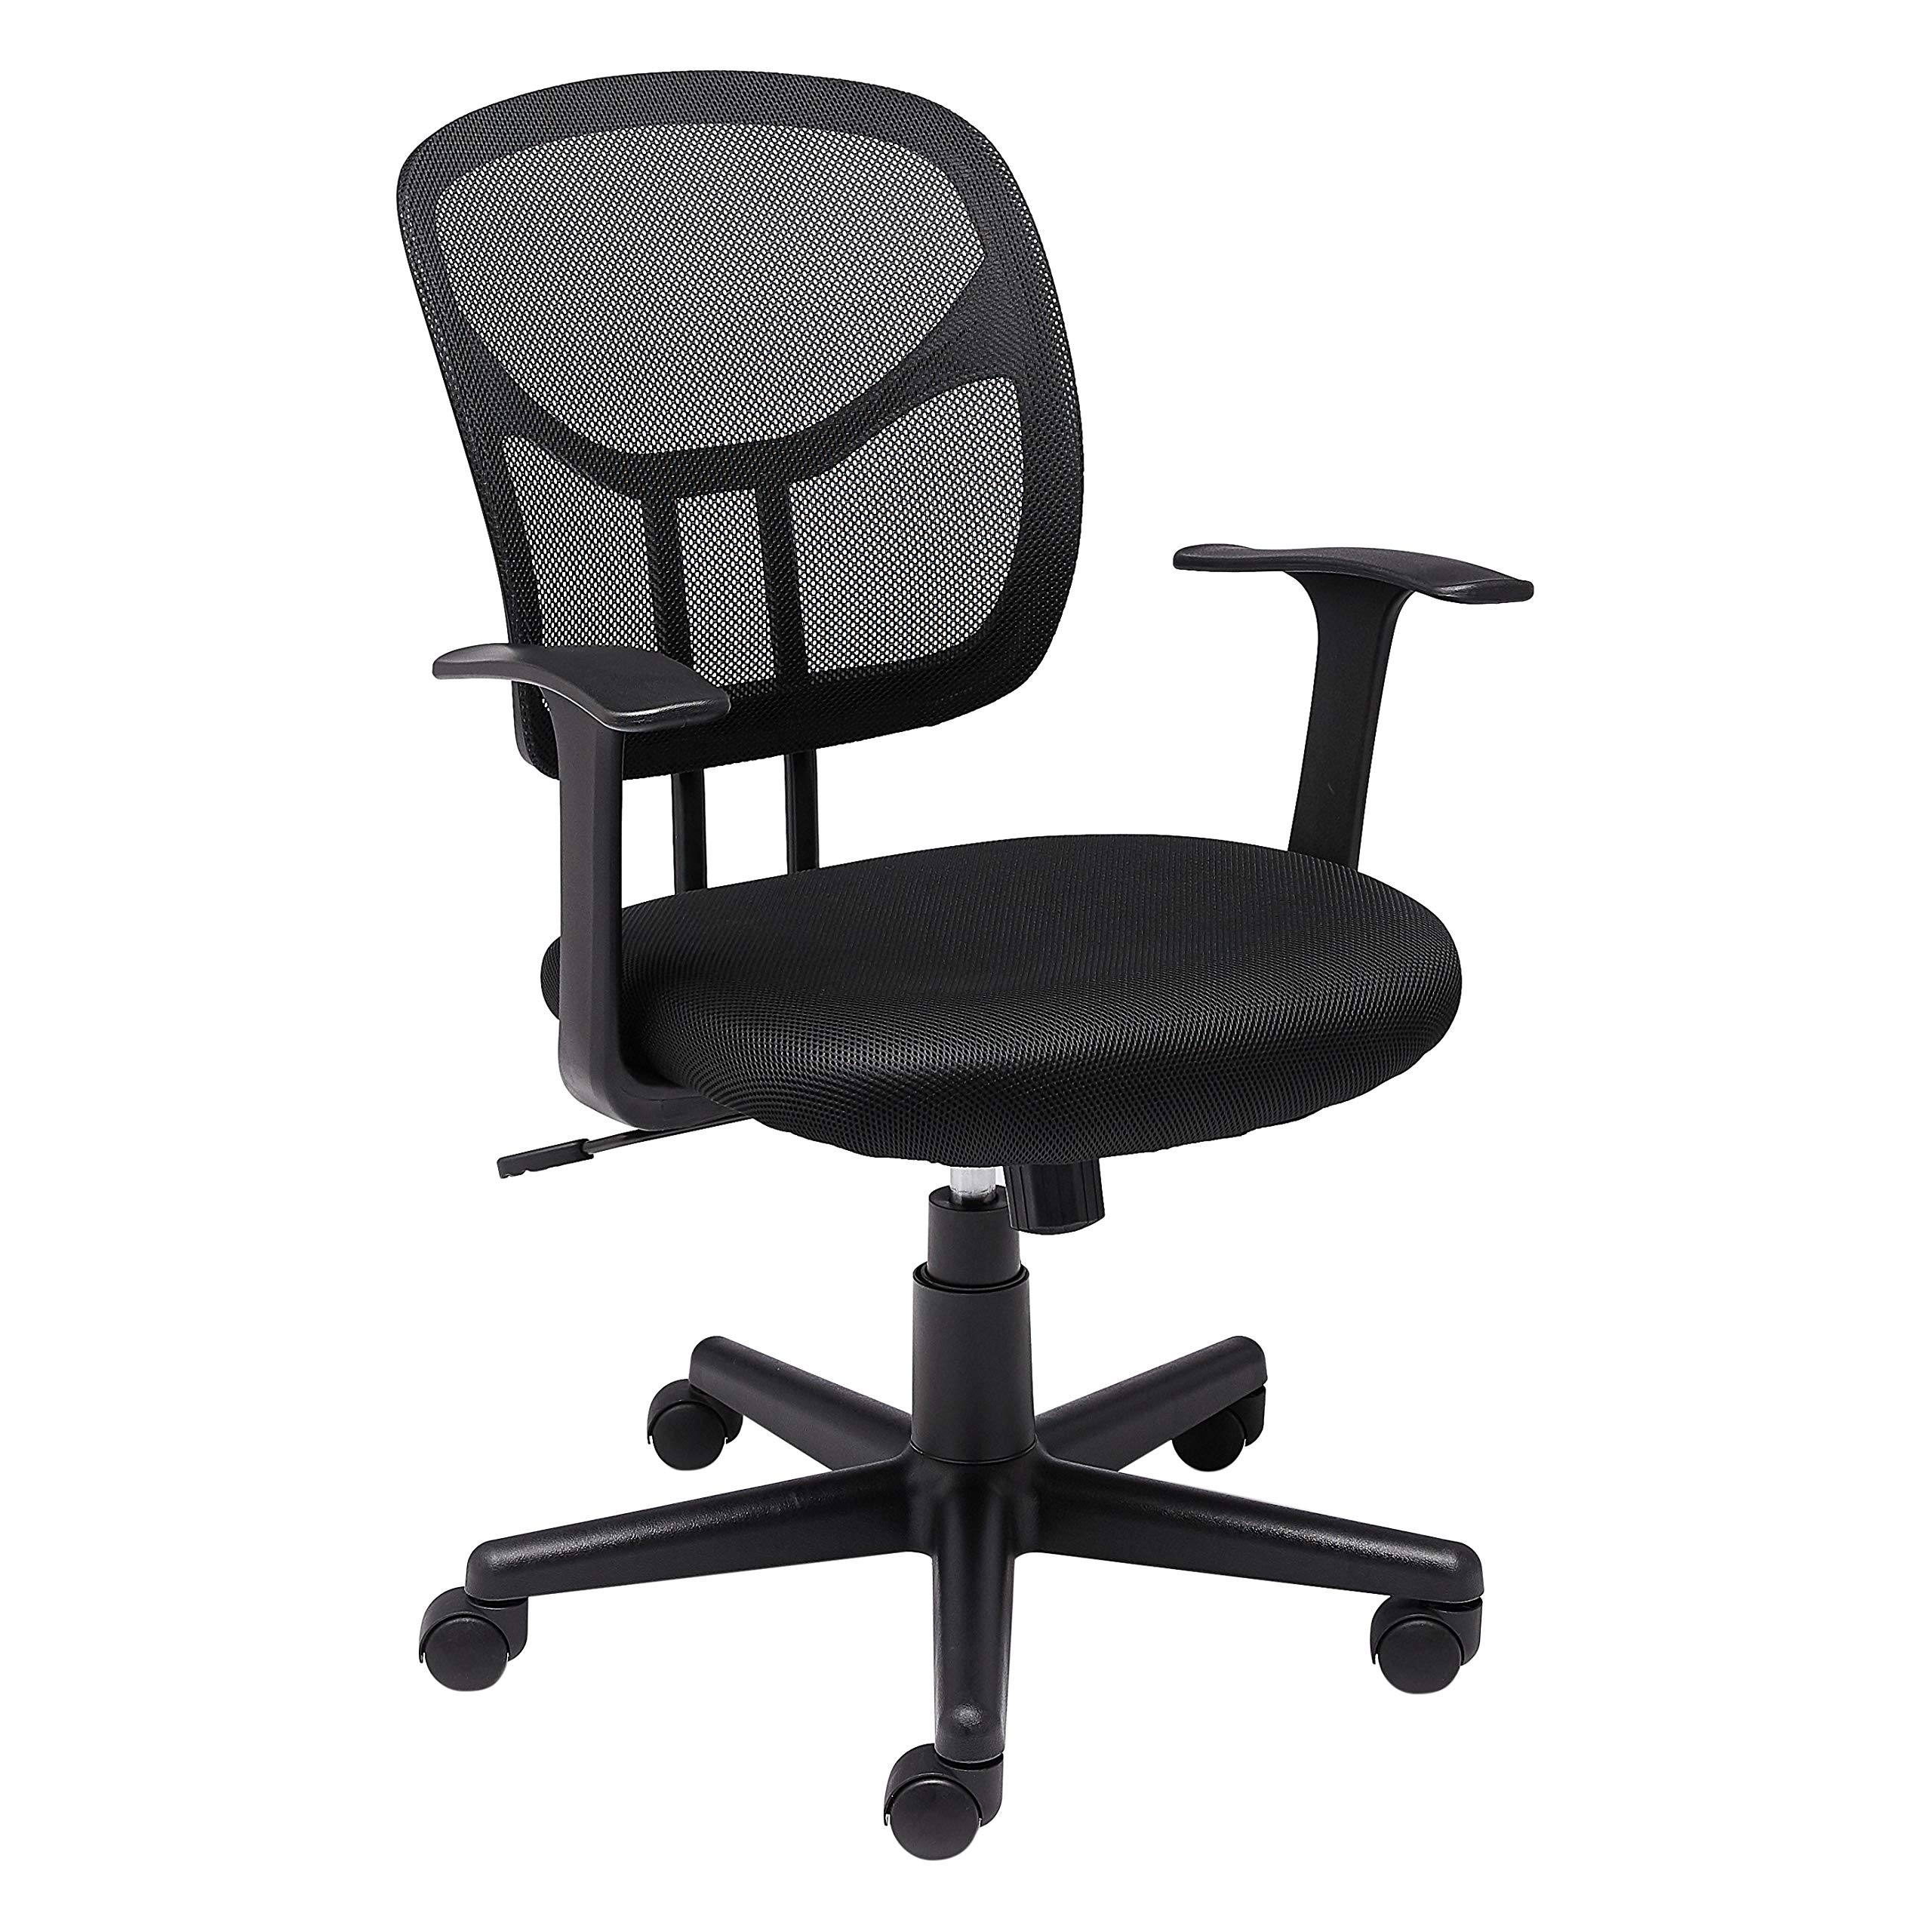 Amazon Basics Mesh, Mid-Back, Adjustable, Swivel Office Desk Chair with Armrests, Black : $41.99